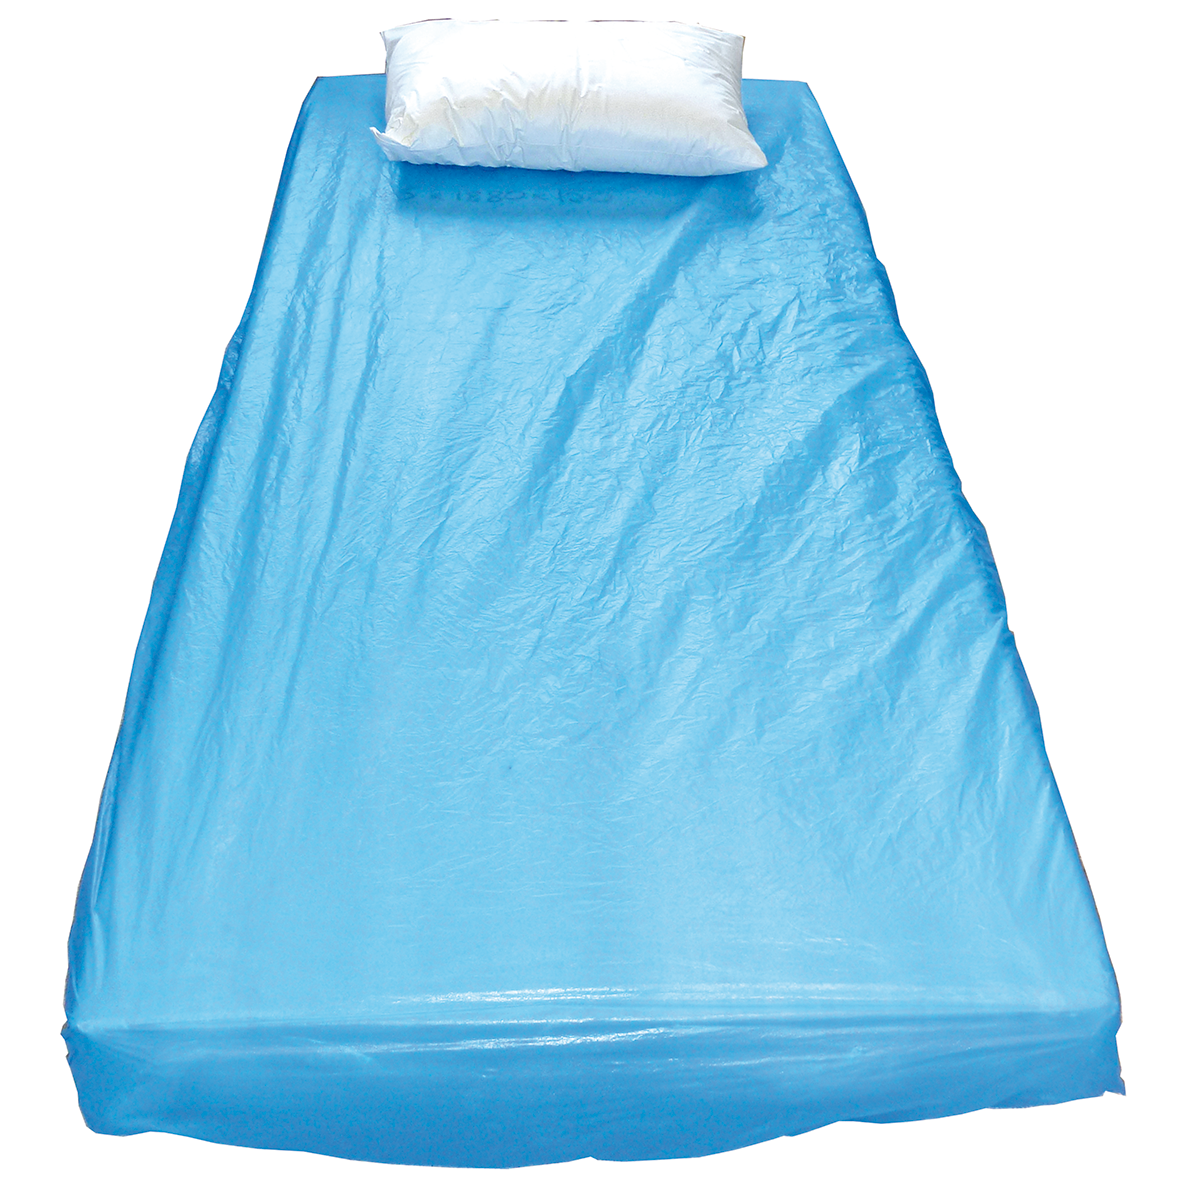 Disposable Waterproof Mattress Protector Haines Medical Australia 0230